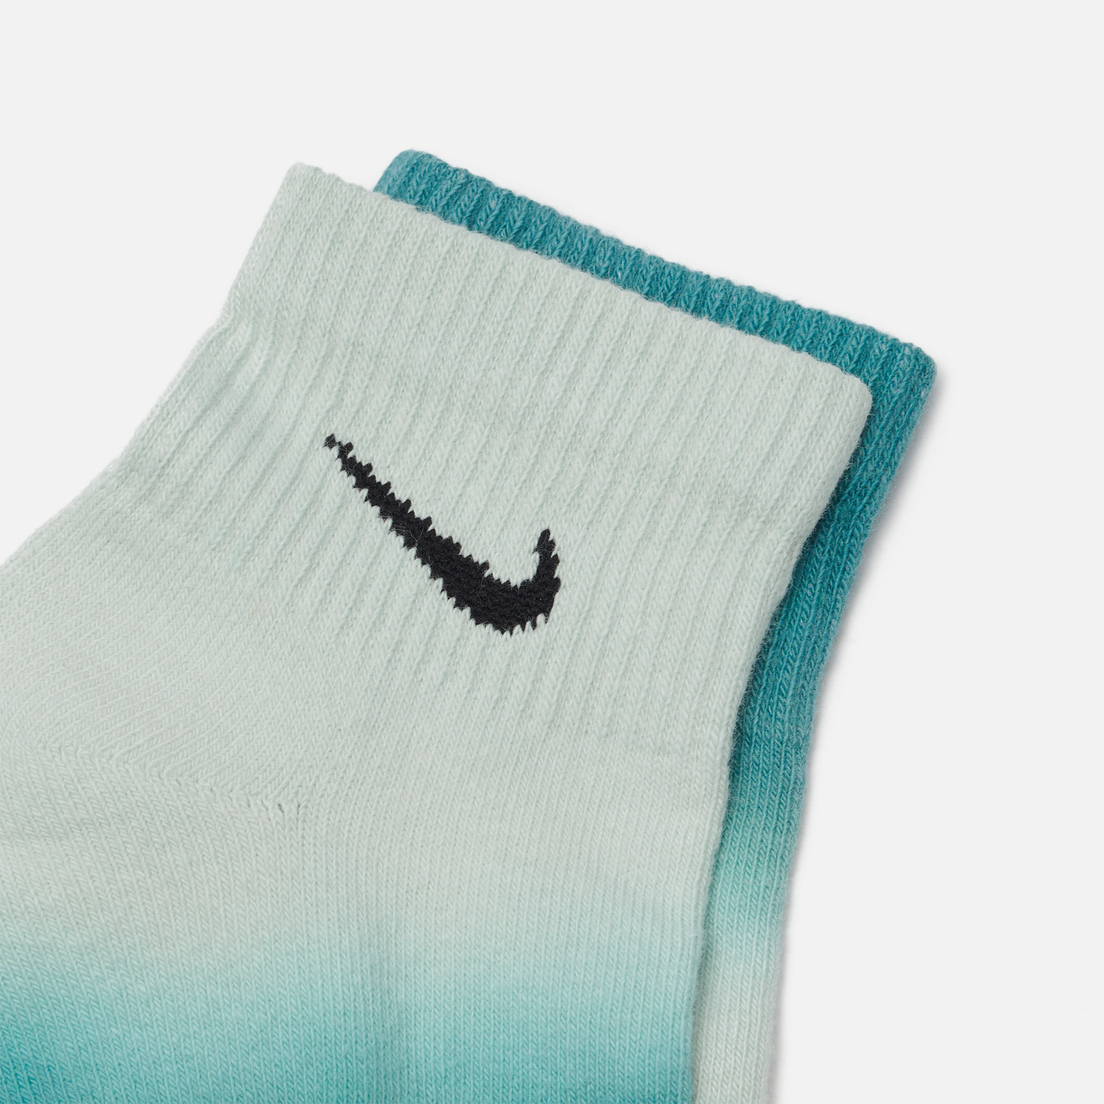 Nike Комплект носков 2-Pack Everyday Plus Cushioned